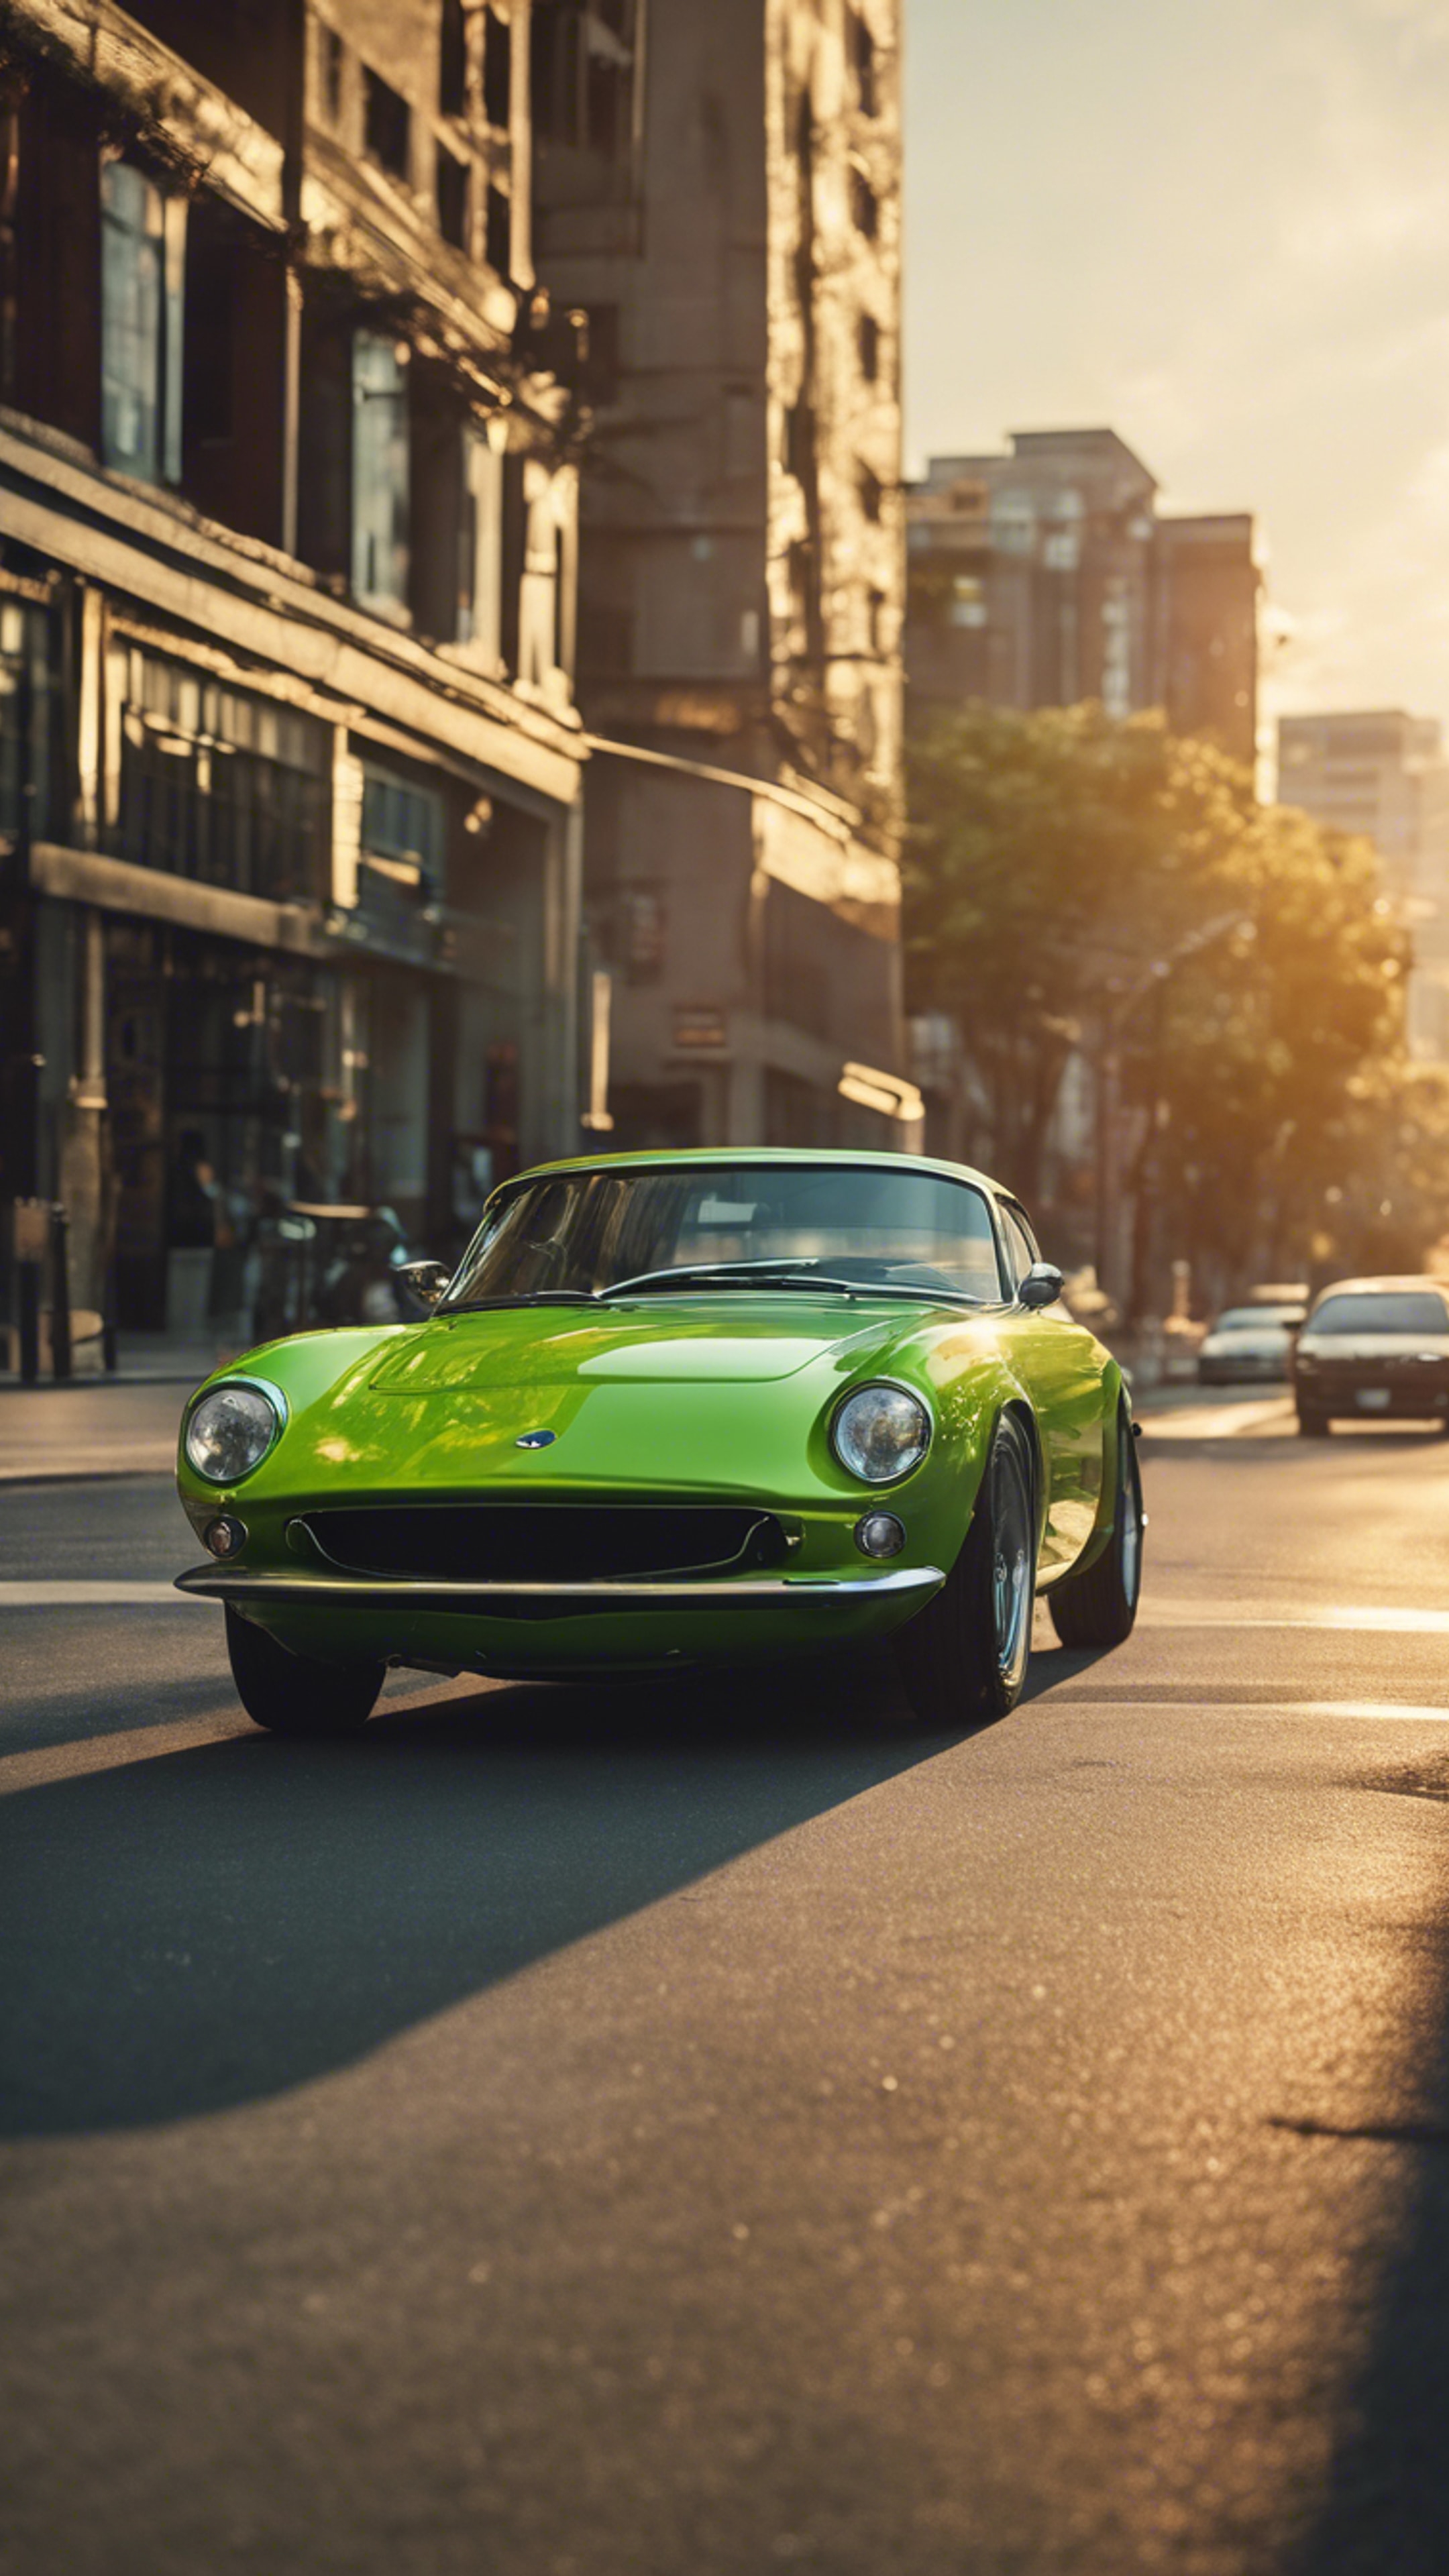 A lime green sports car speeding down a city street at sunset. Валлпапер[650ecab6c10046e0a1d5]